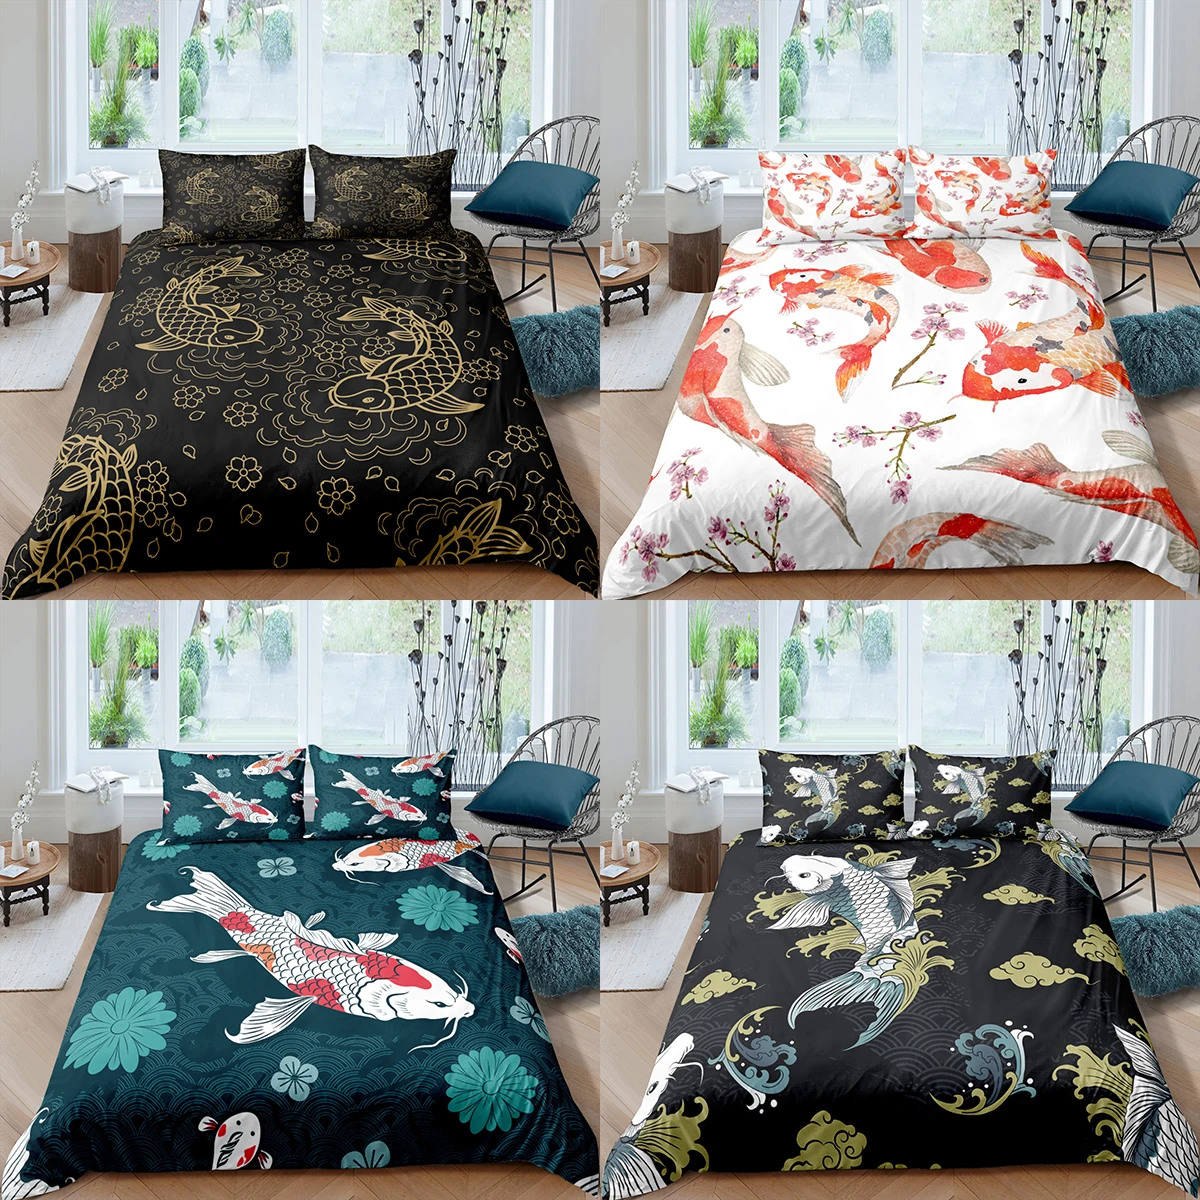 

Home Textiles Luxury 3D Boho Fish Duvet Cover Set and Pillowcase Kids Bedding Set AU/EU/UK/US Queen and King Size Bedding